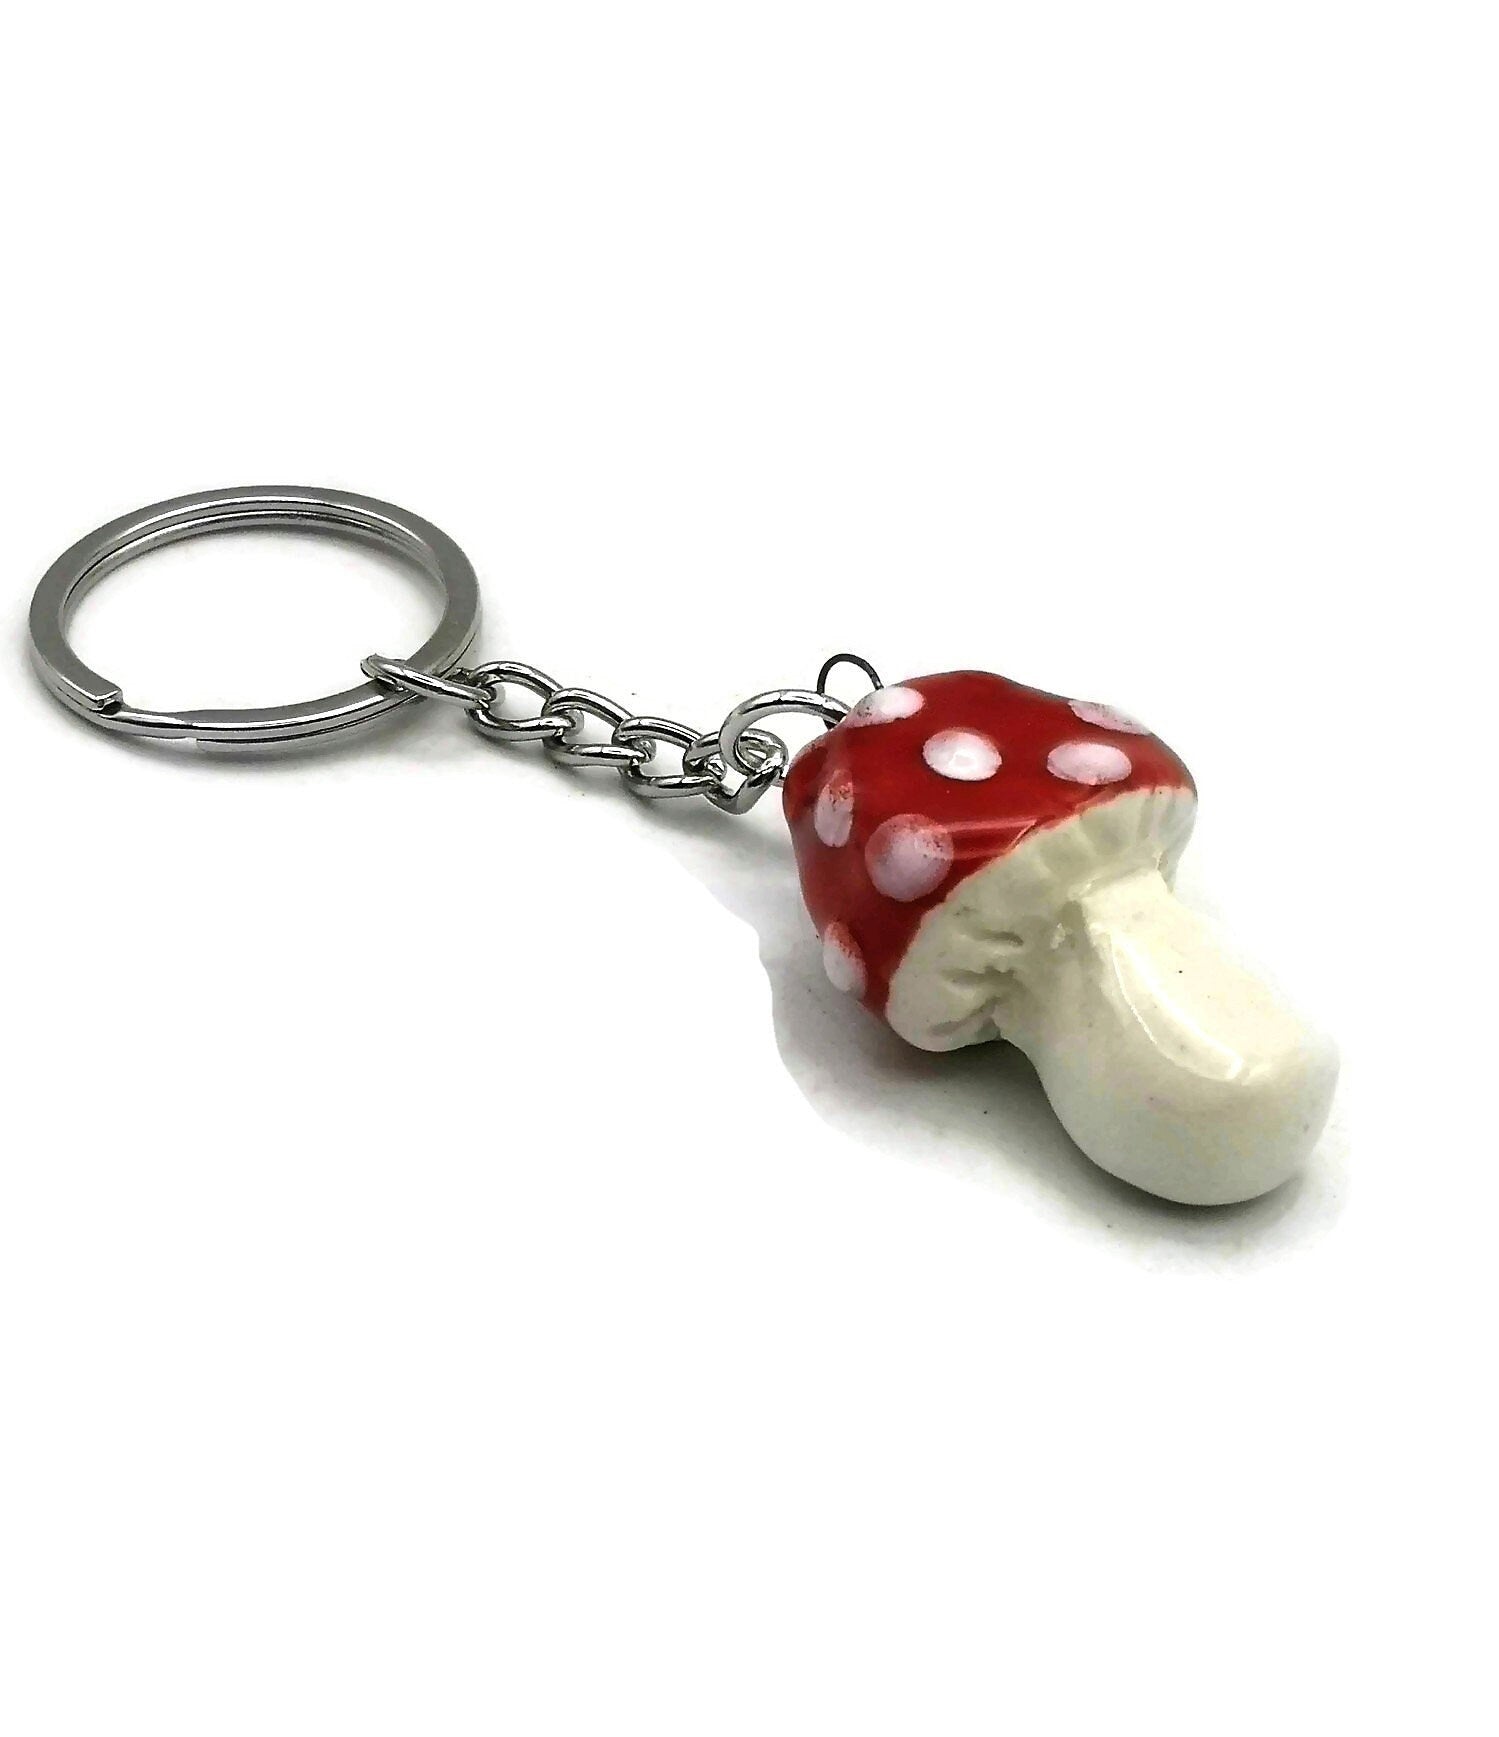 Handmade Ceramic Red Mushroom Keychain For Women, Cut Mushroom Charm Key Chain Gift For Her, Unique Artisan Cottagecore Accessories - Ceramica Ana Rafael